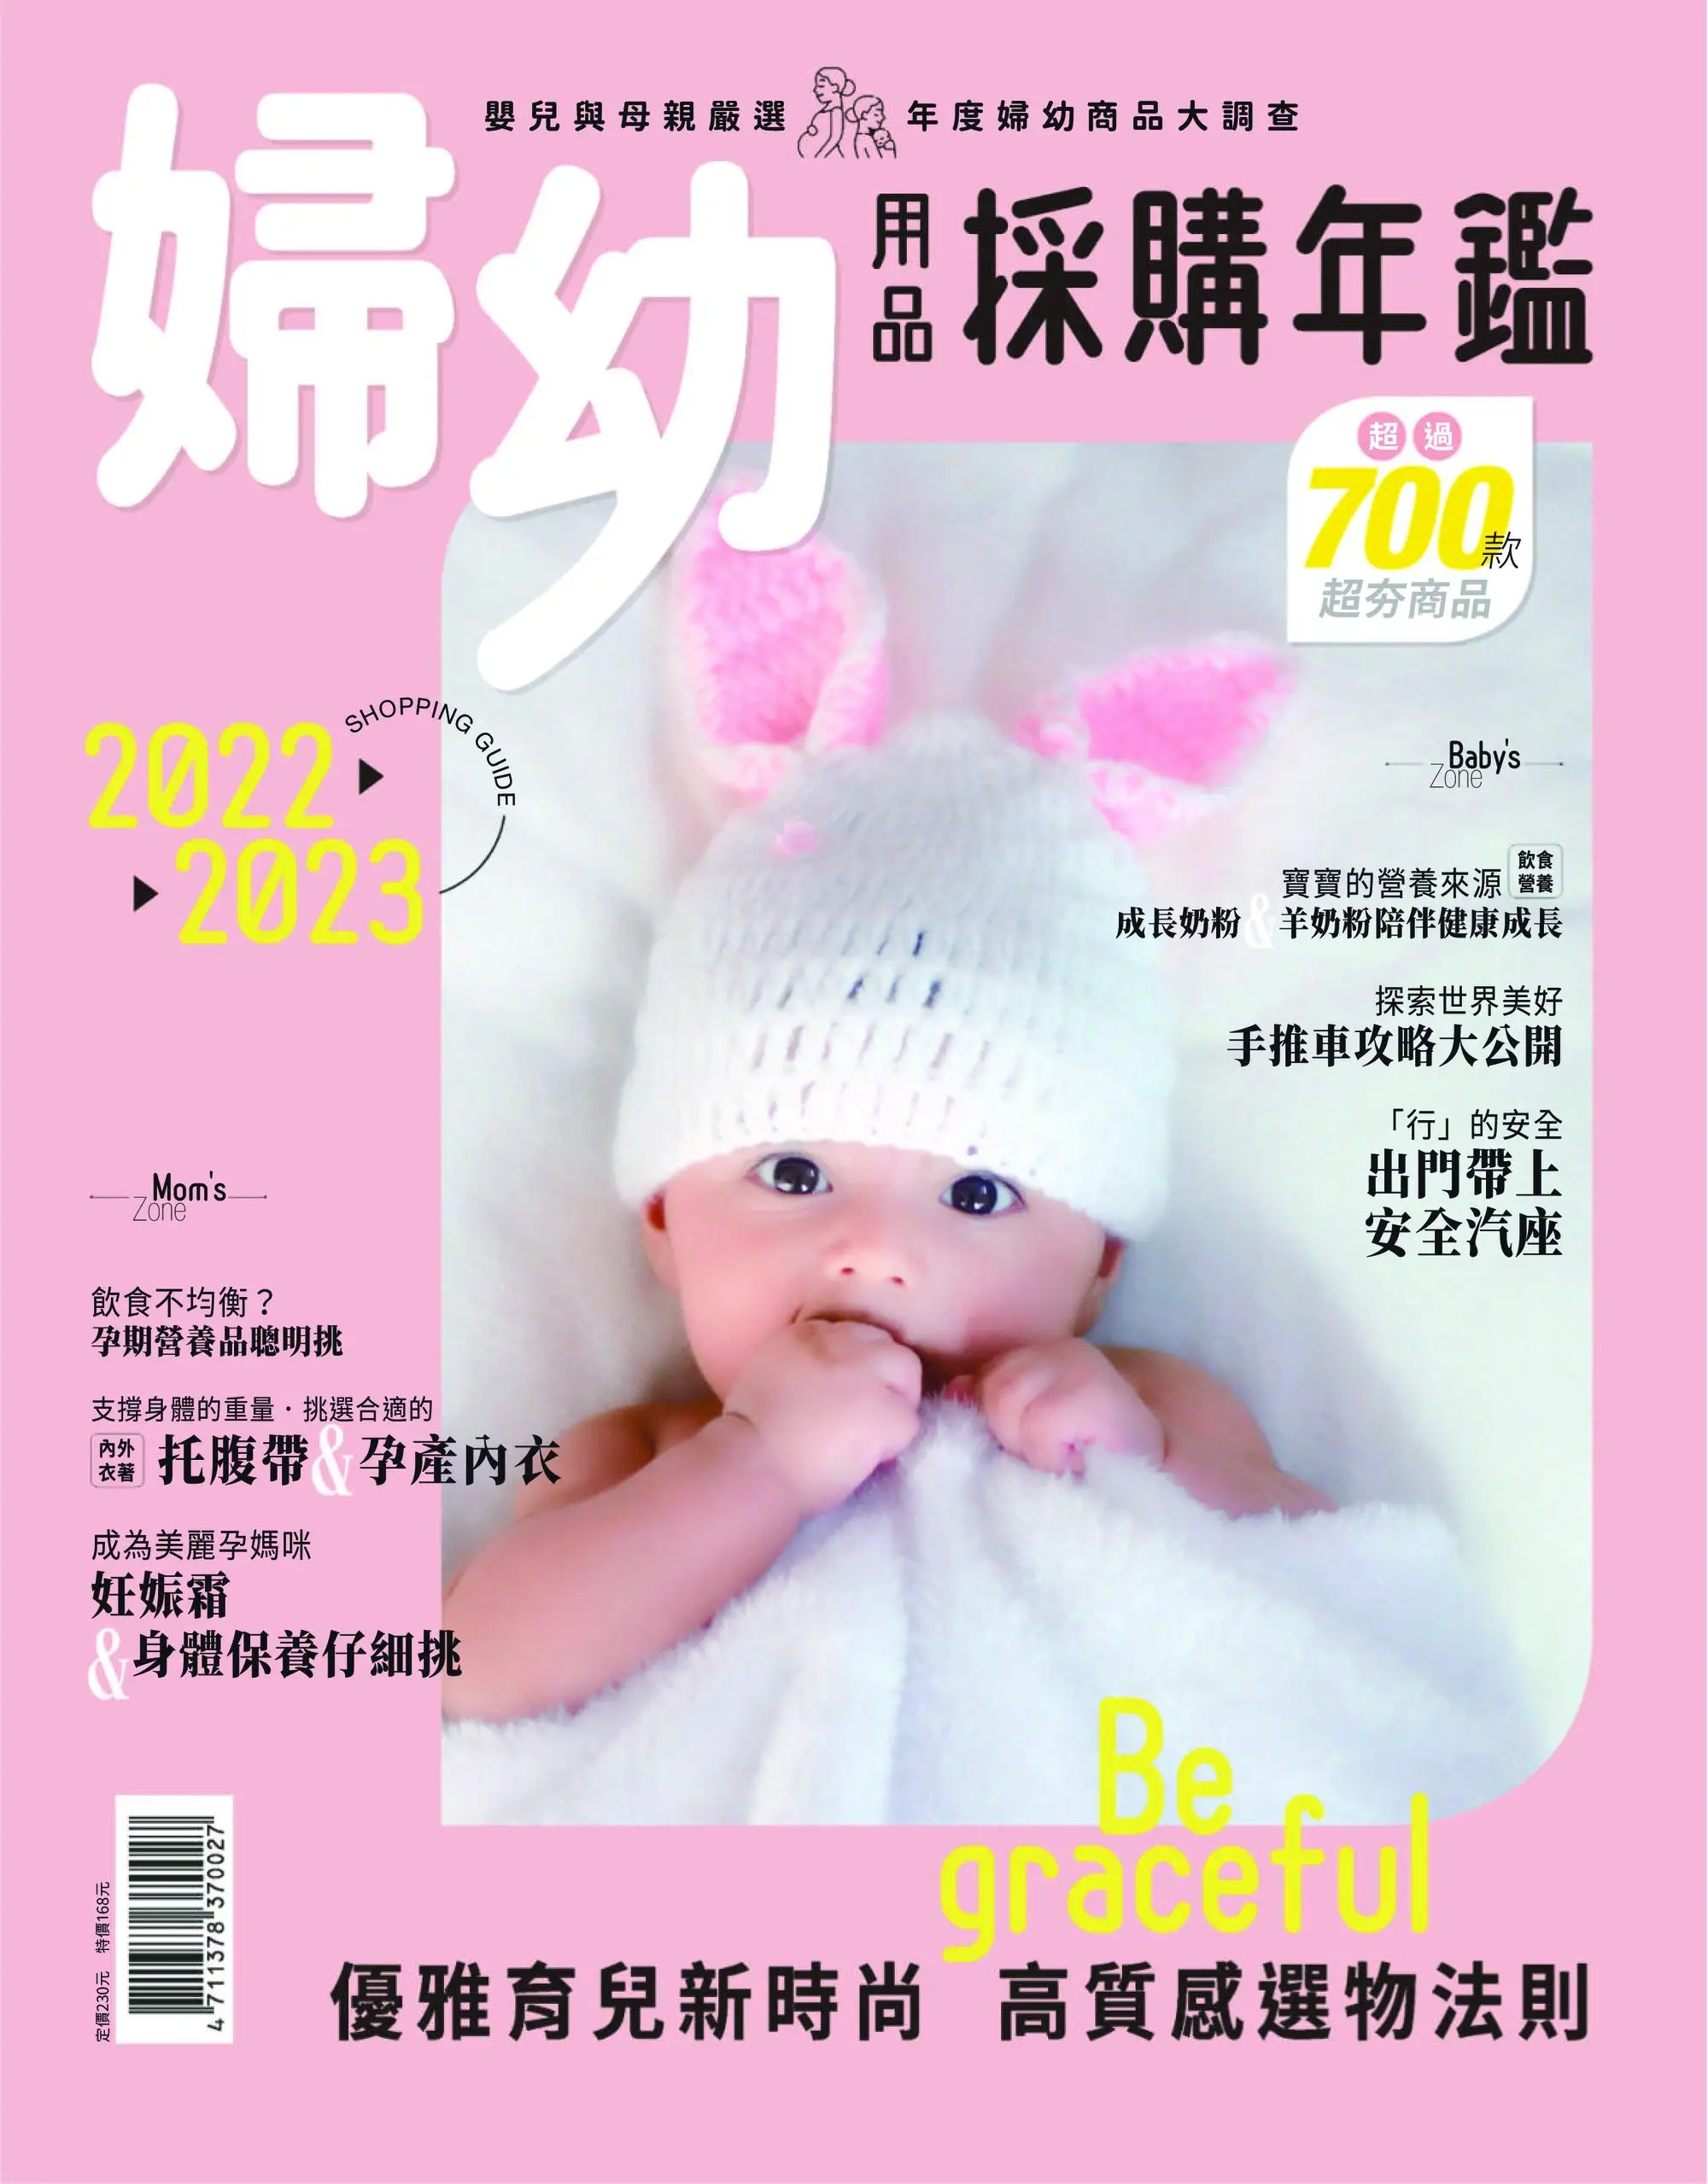 Buyer’s Guide for Parents 婦幼用品採購年鑑 2022年-2023年